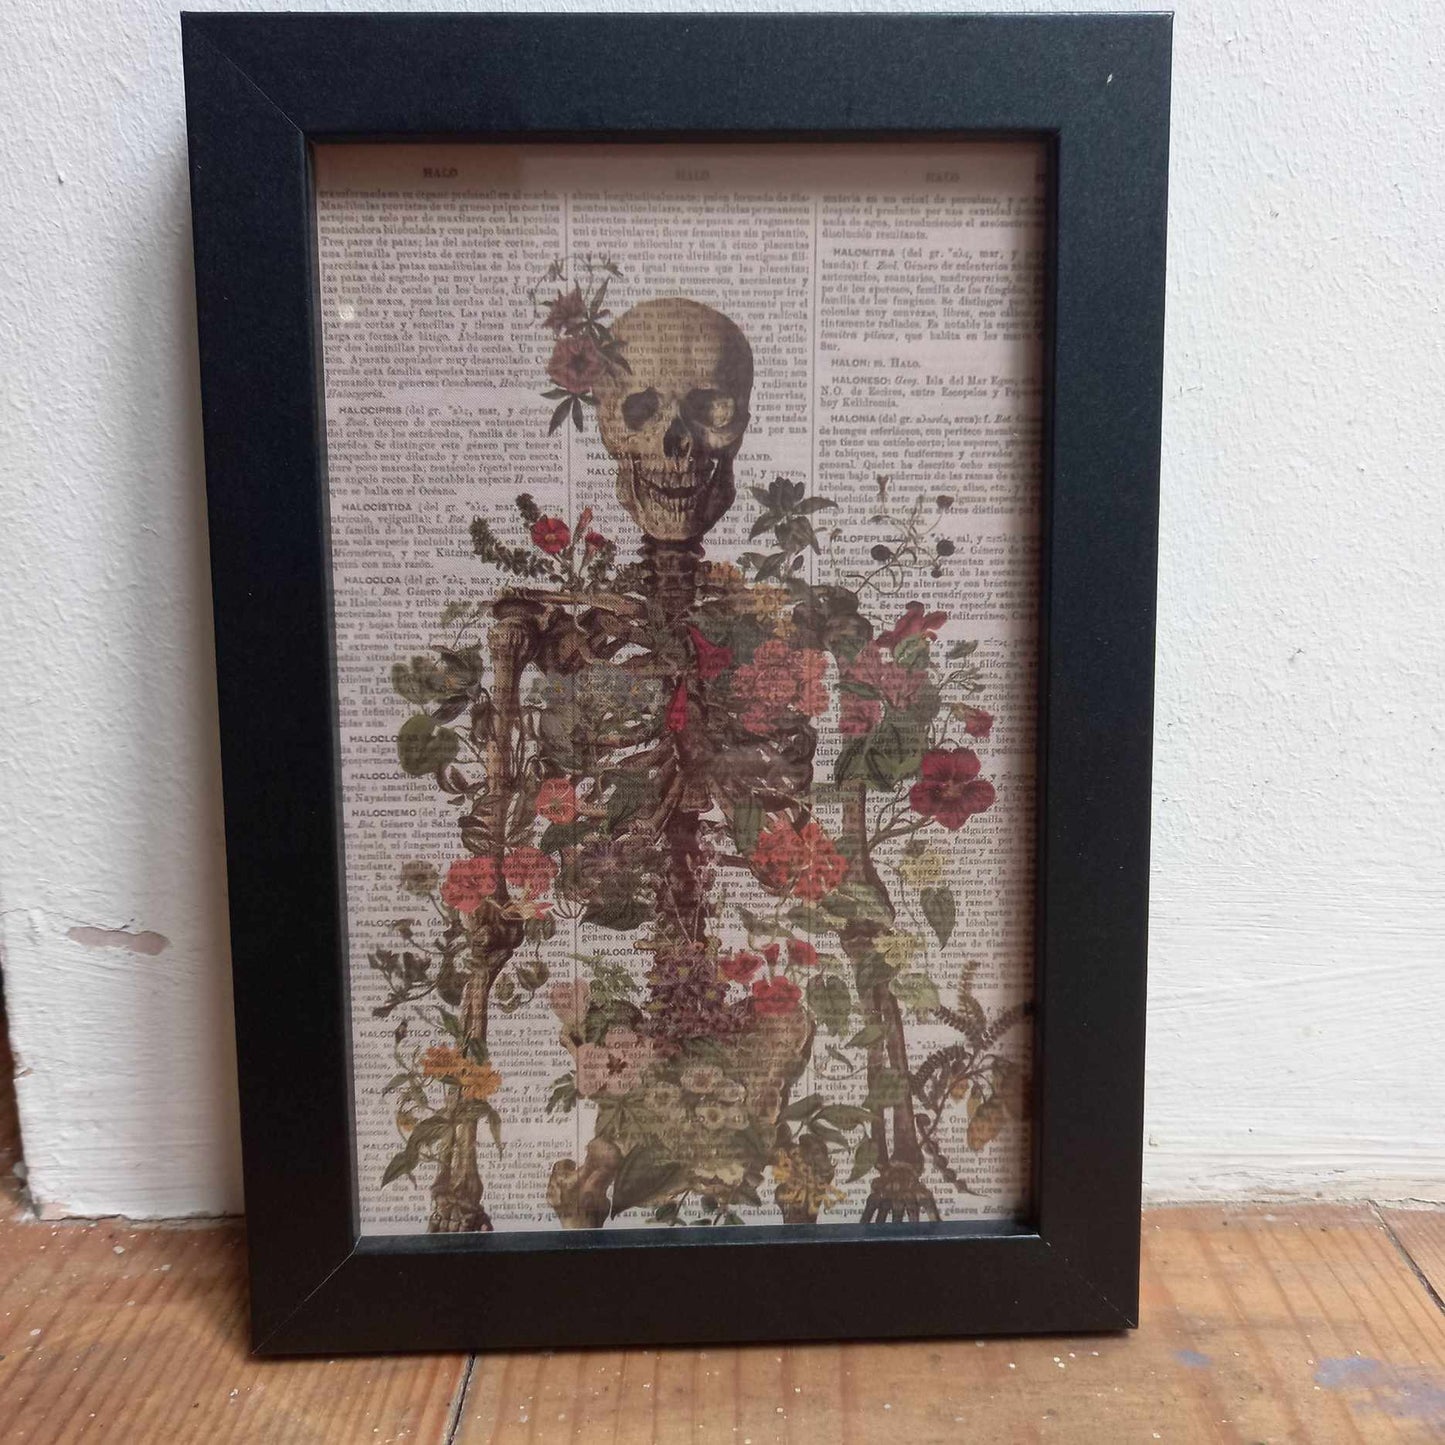 Framed Illustrations (Anatomical and more)